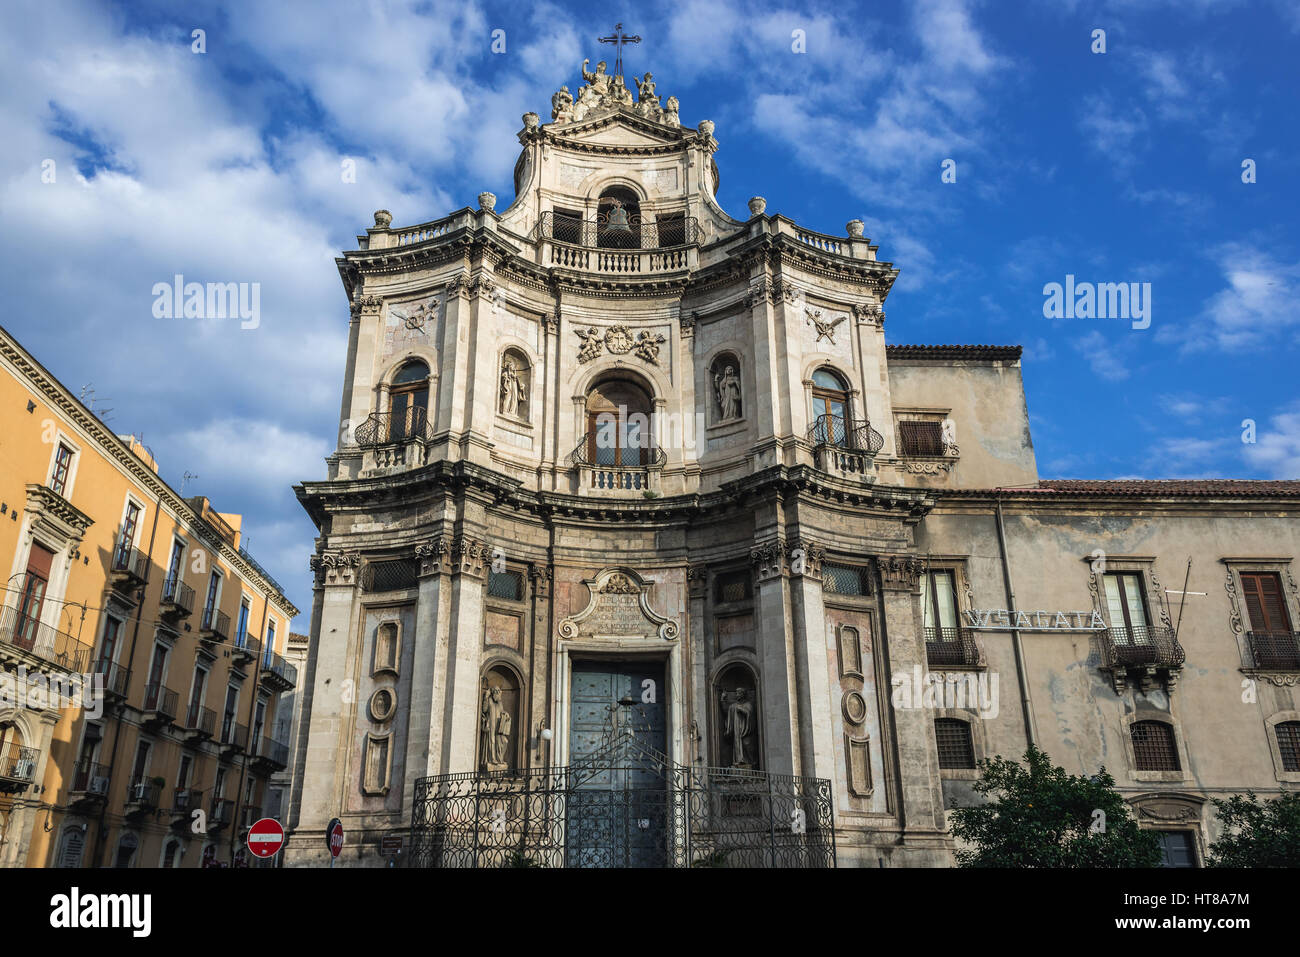 Baroque style Chiesa di San Placido Monaco e Martire (Church of Saint Placidus) in Catania city on the east side of Sicily Island, Italy Stock Photo